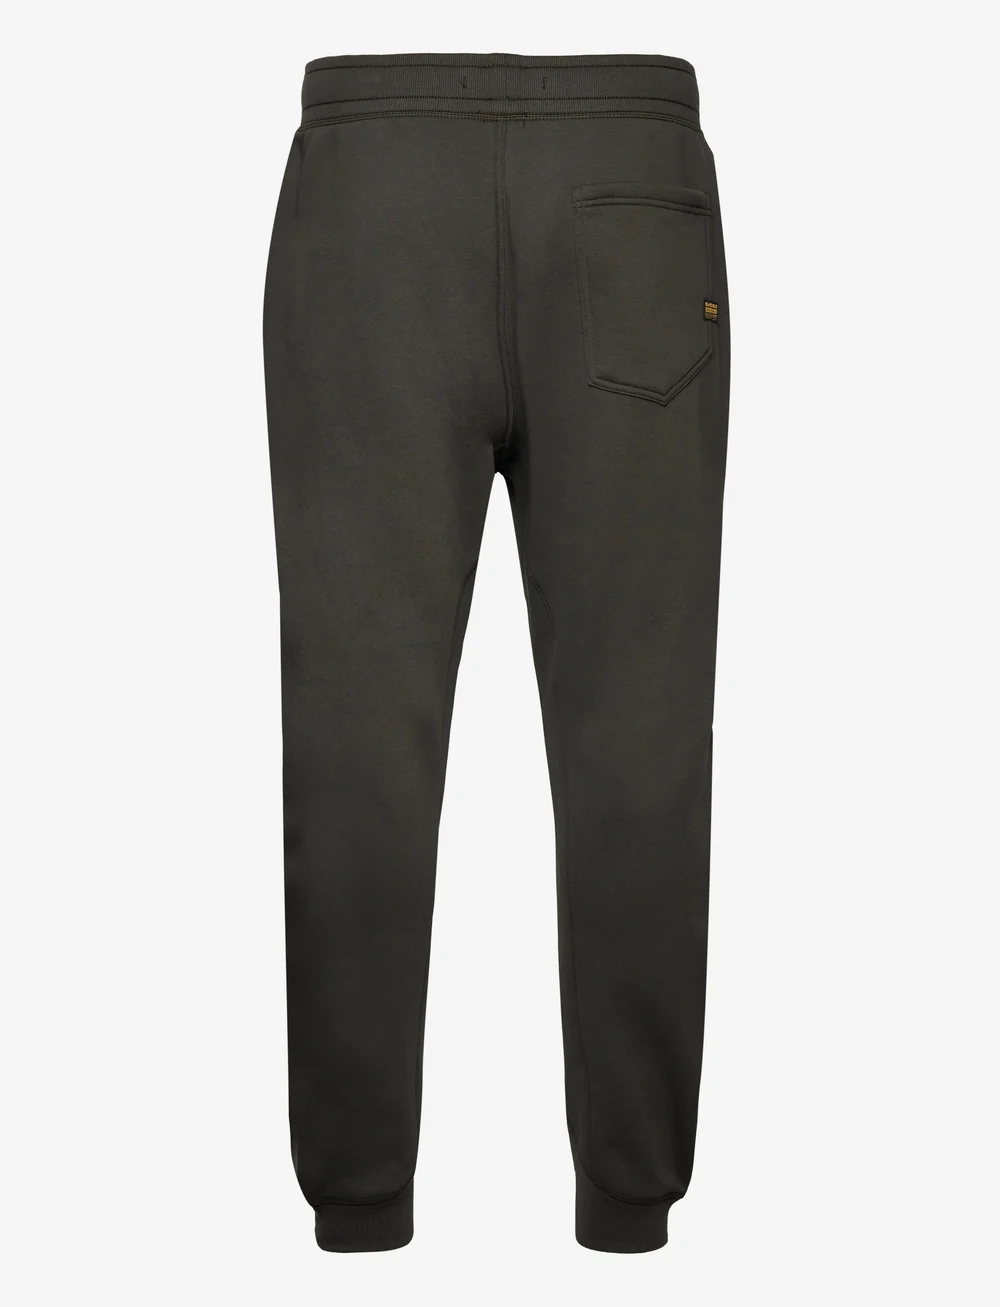 Premium Core Type C Sweatpants, Beige